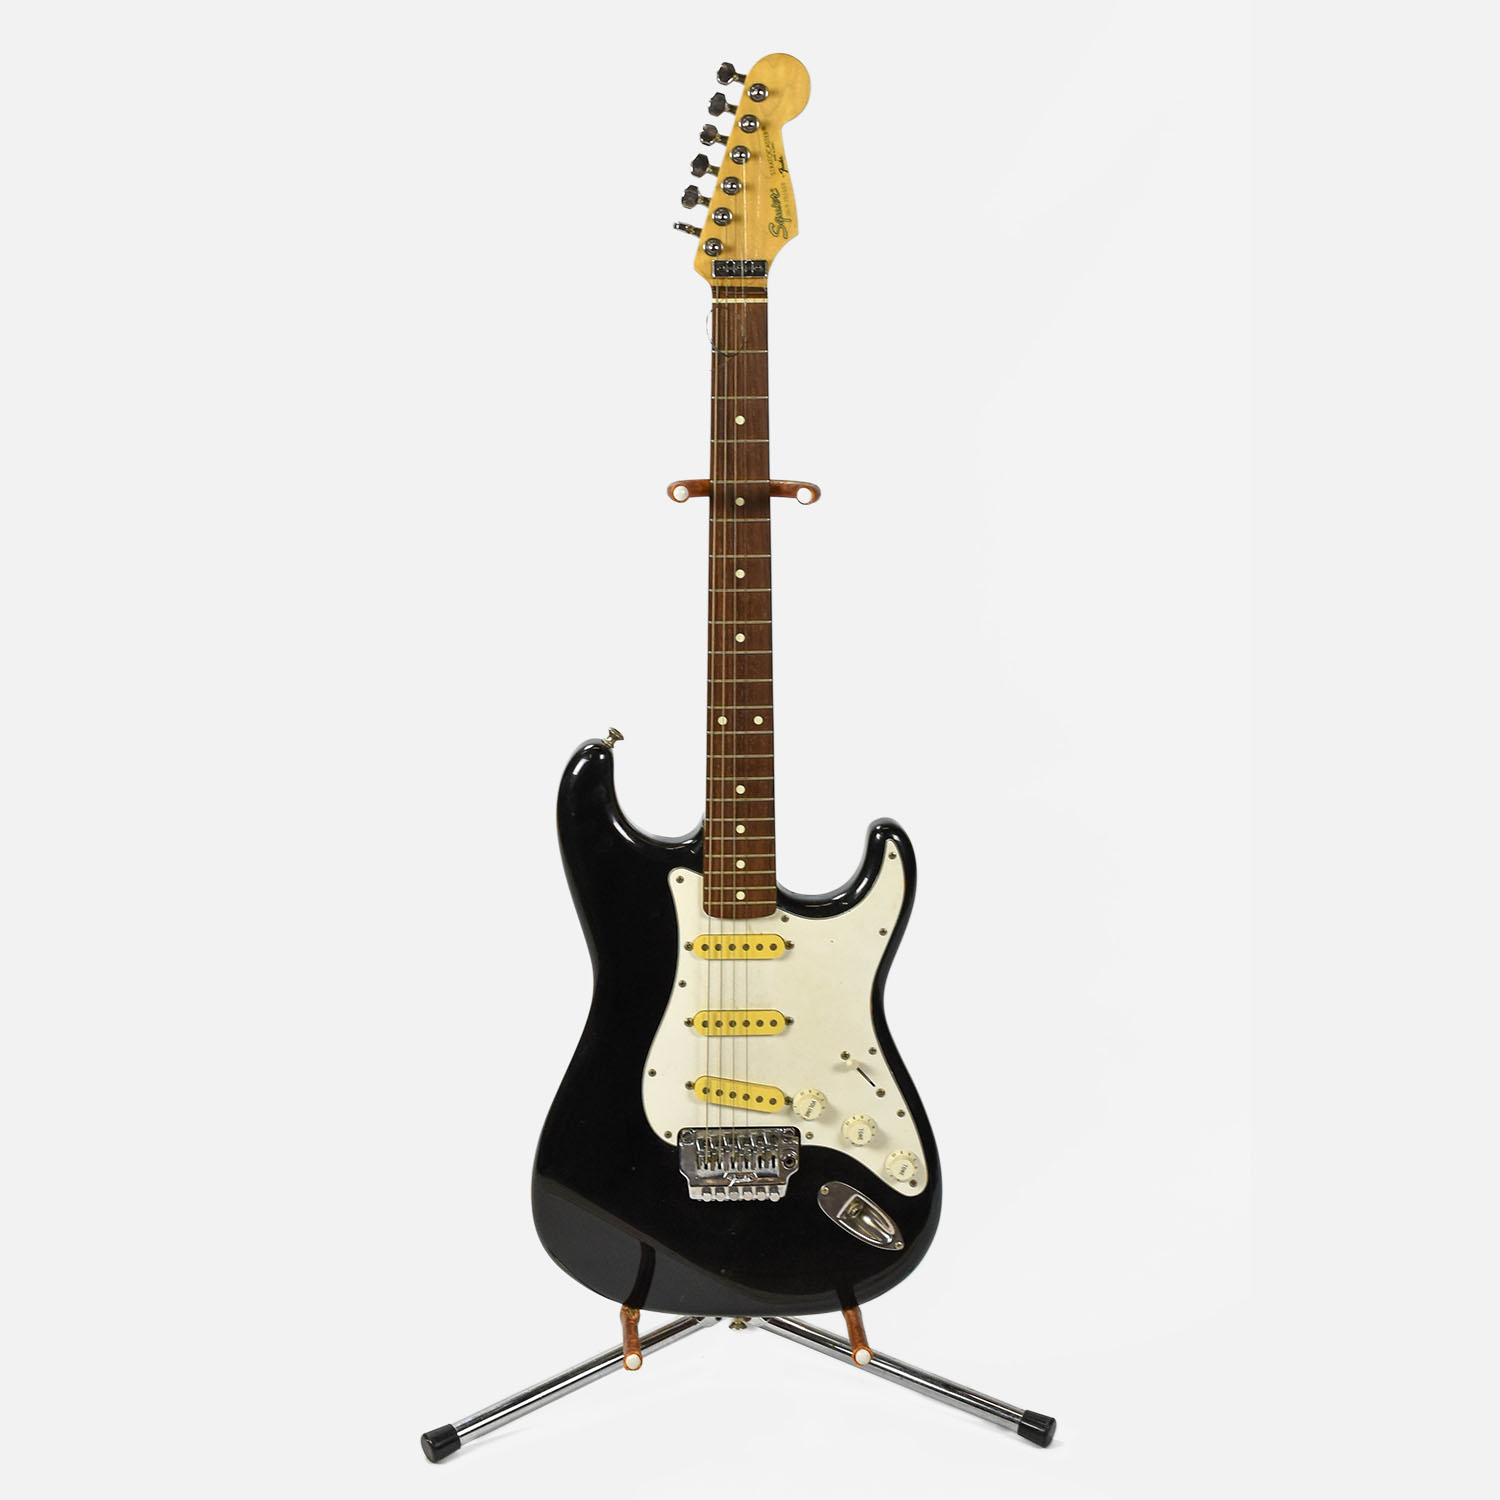 Black Fender Squire Stratocaster Guitar Japan